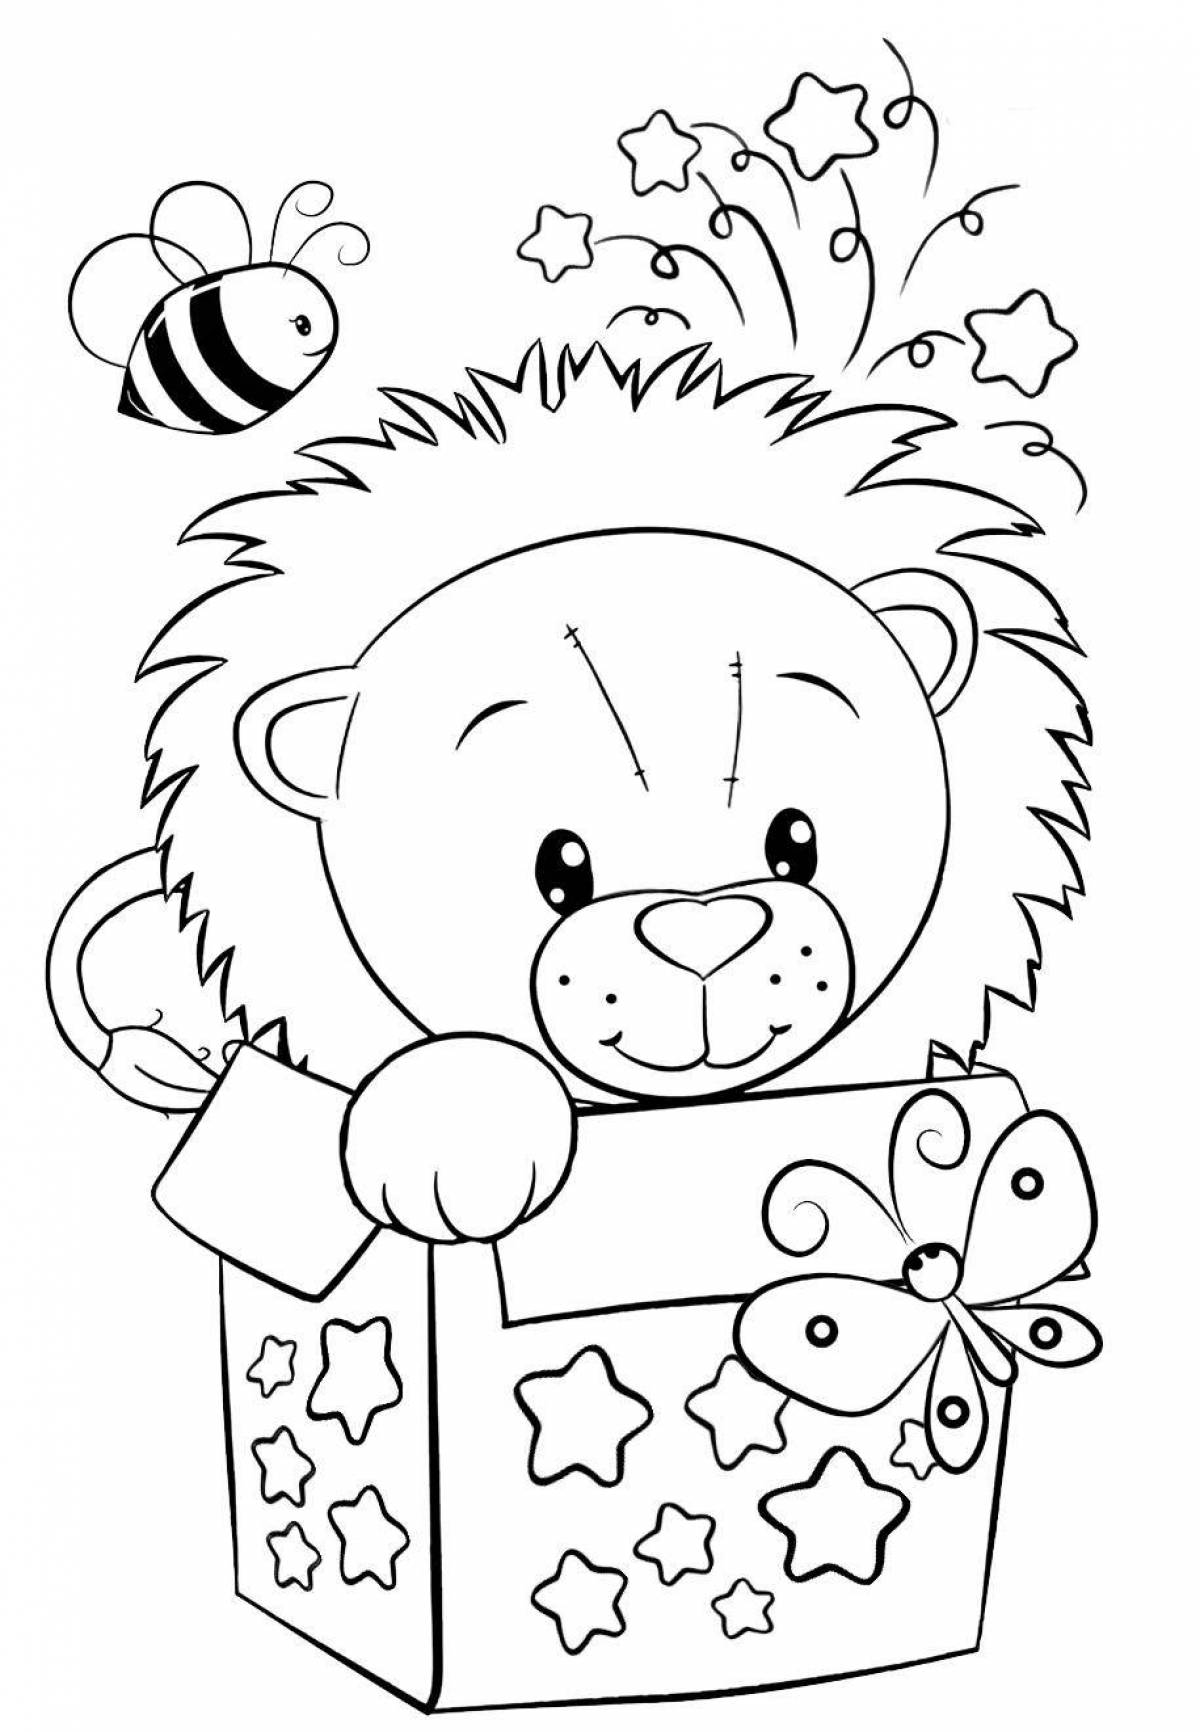 Coloring book shining lion cub